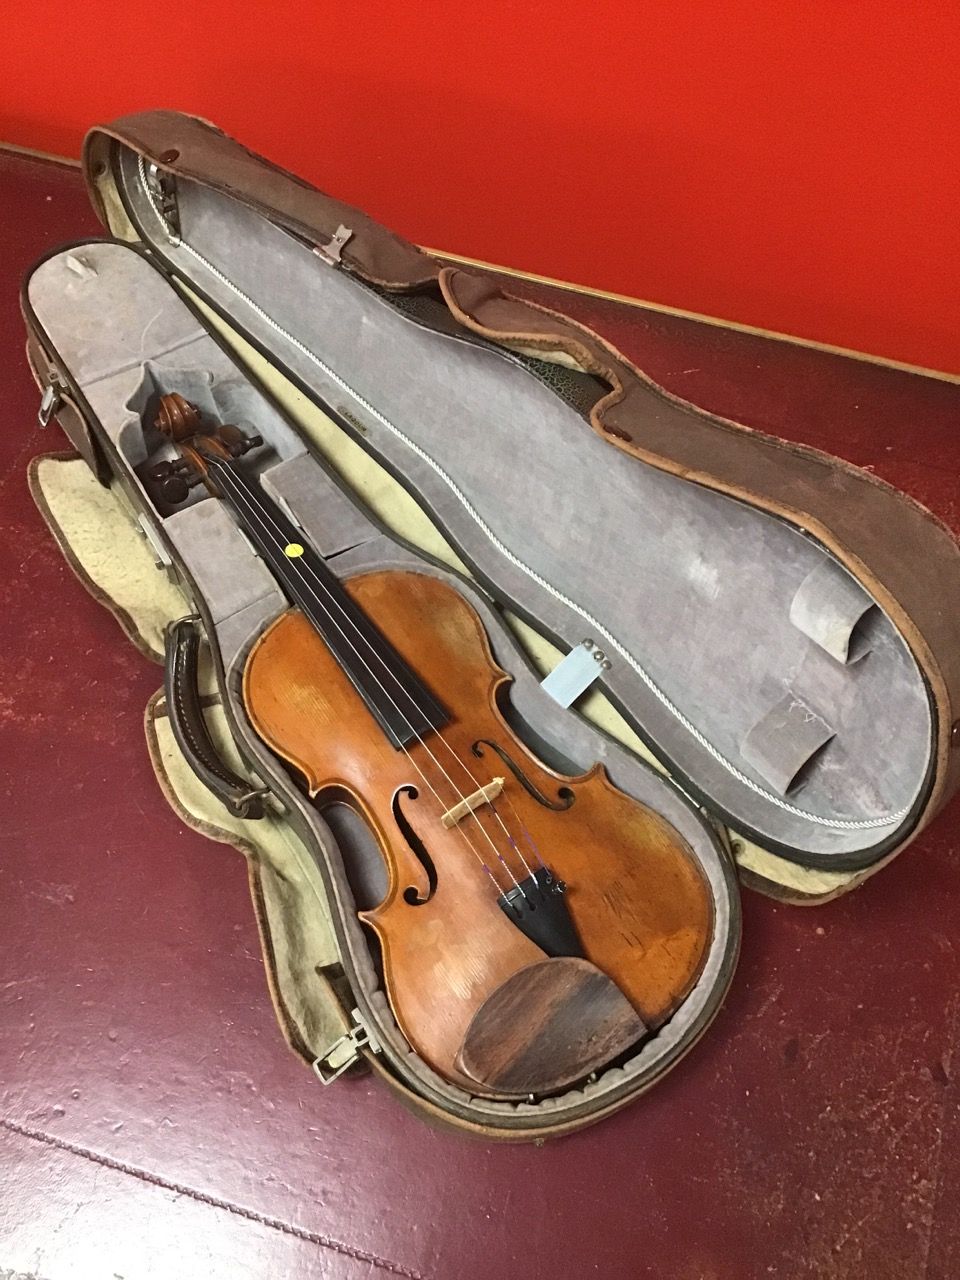 Null COLIN的小提琴，1820年左右在Mirecourt制造，底部有COLIN FILS的铁印，底部有Gerce的印记，长363毫米。